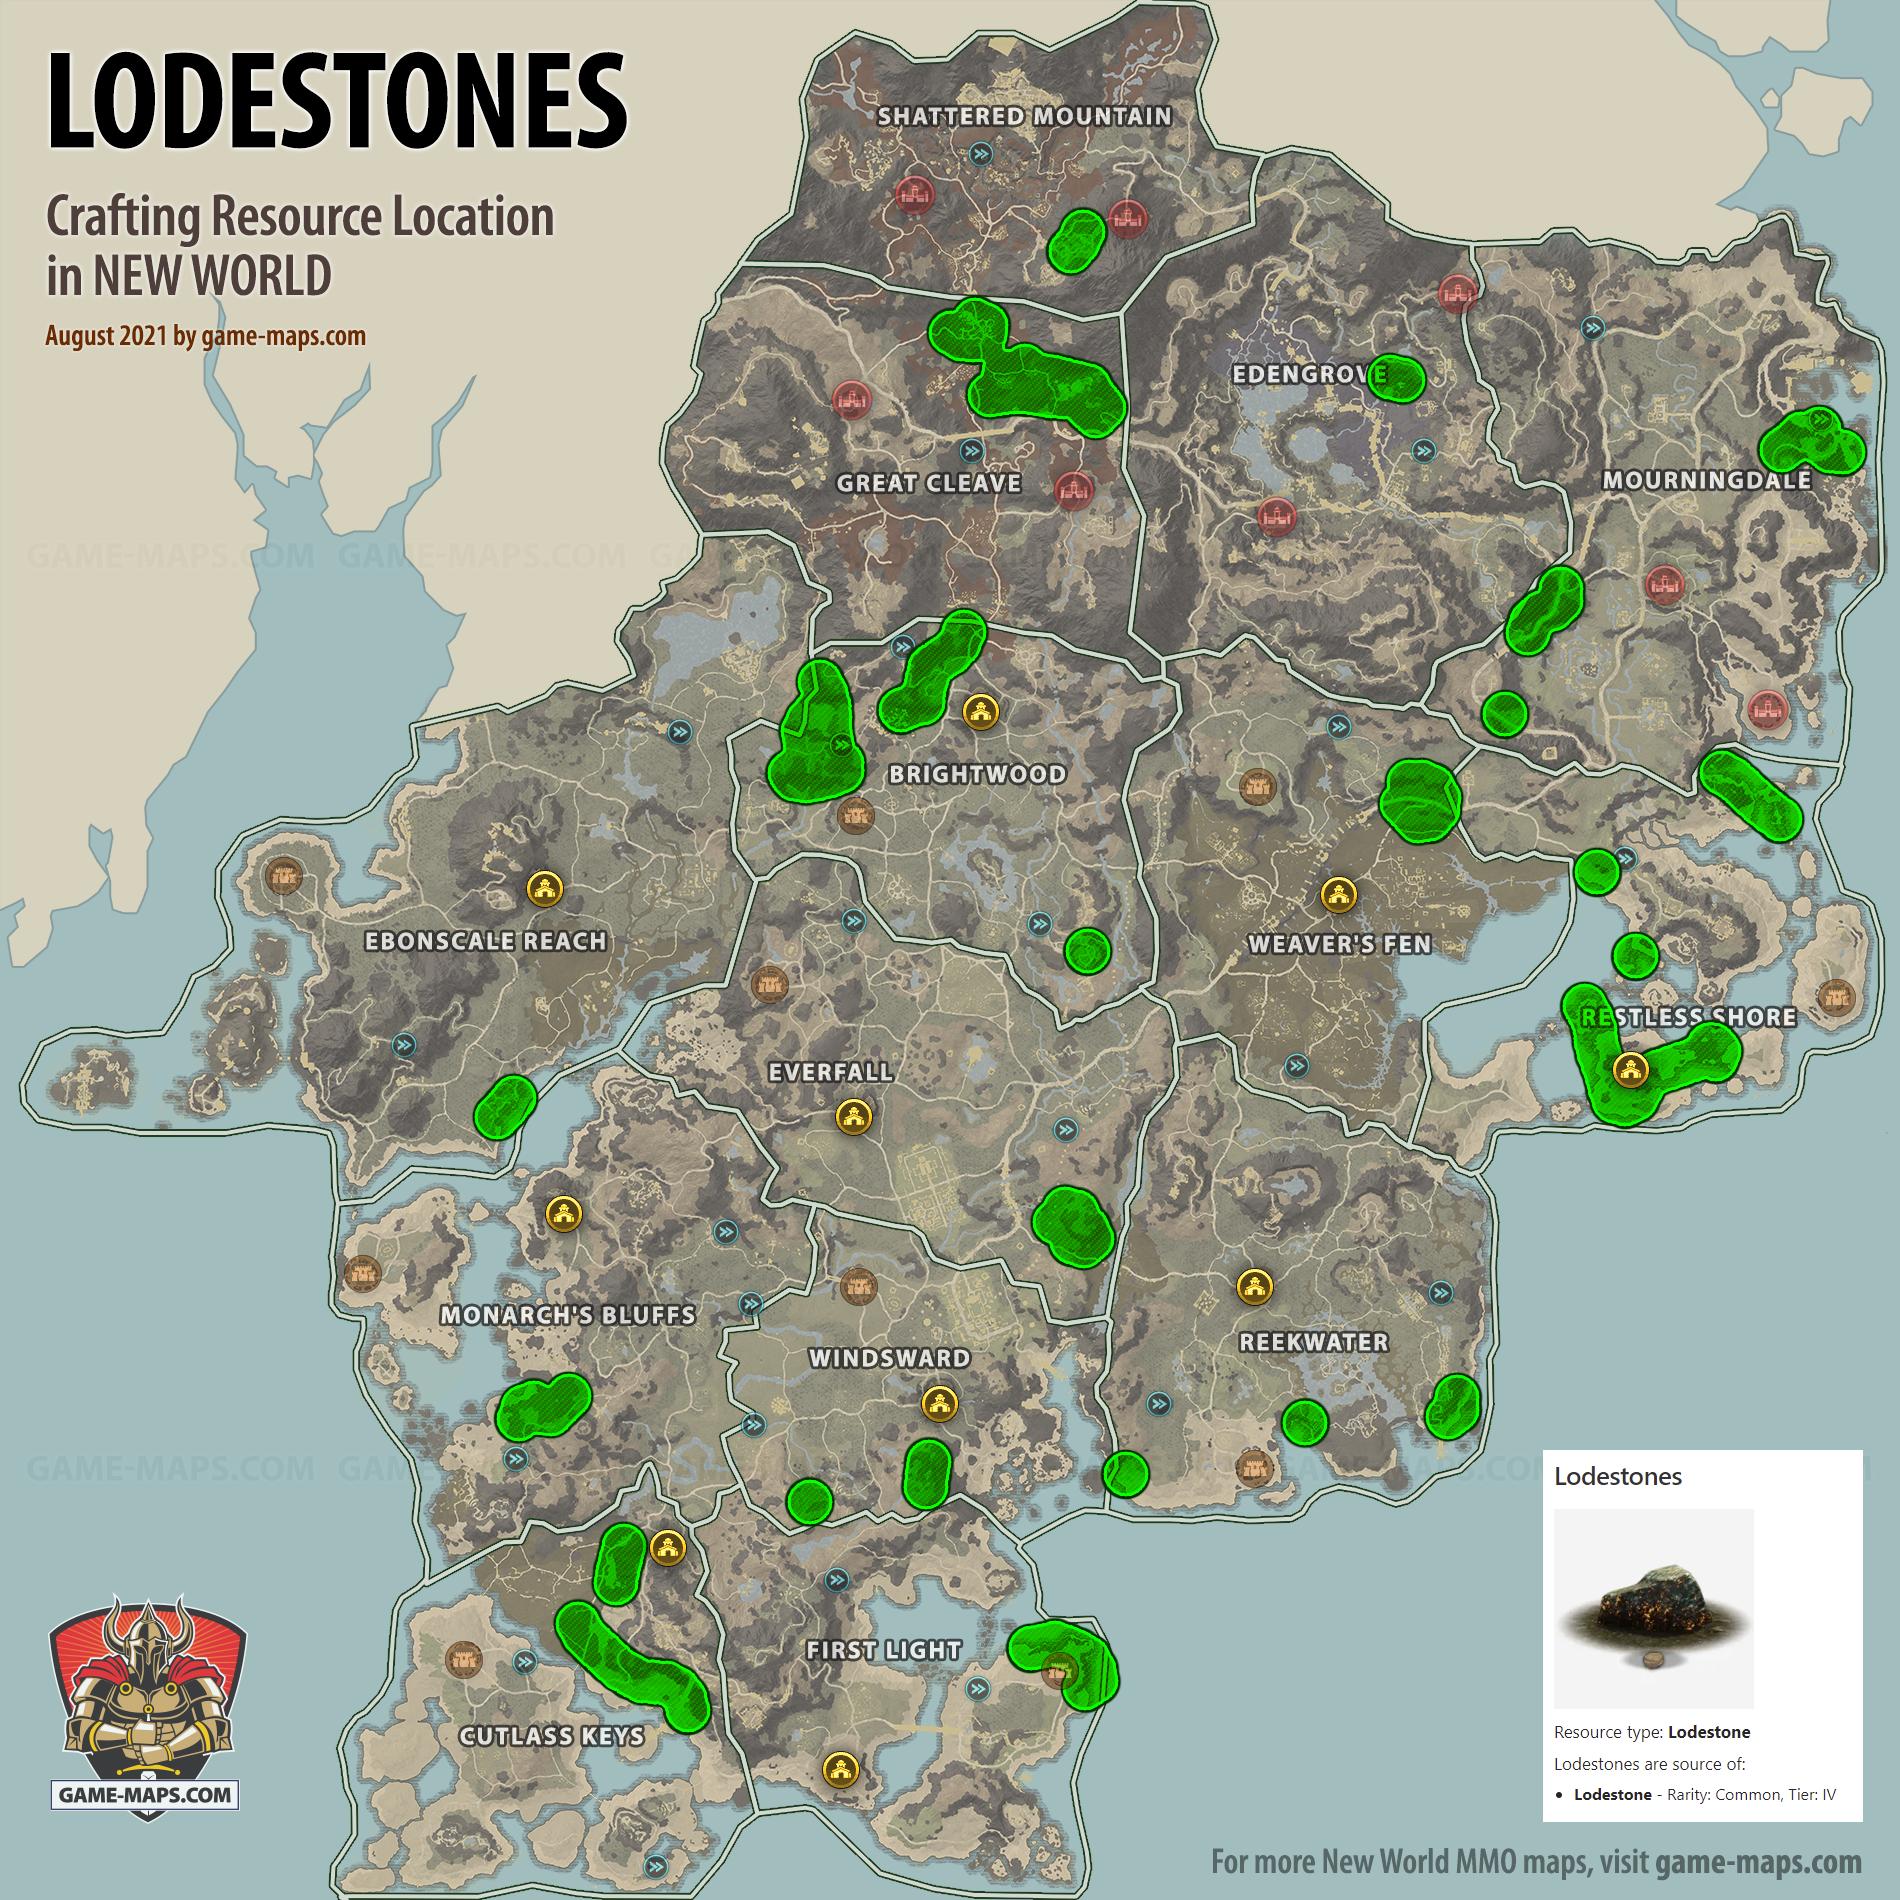 New World Resource Location Map of Lodestones, source of Lodestone Crafting Resources: Lodestones.